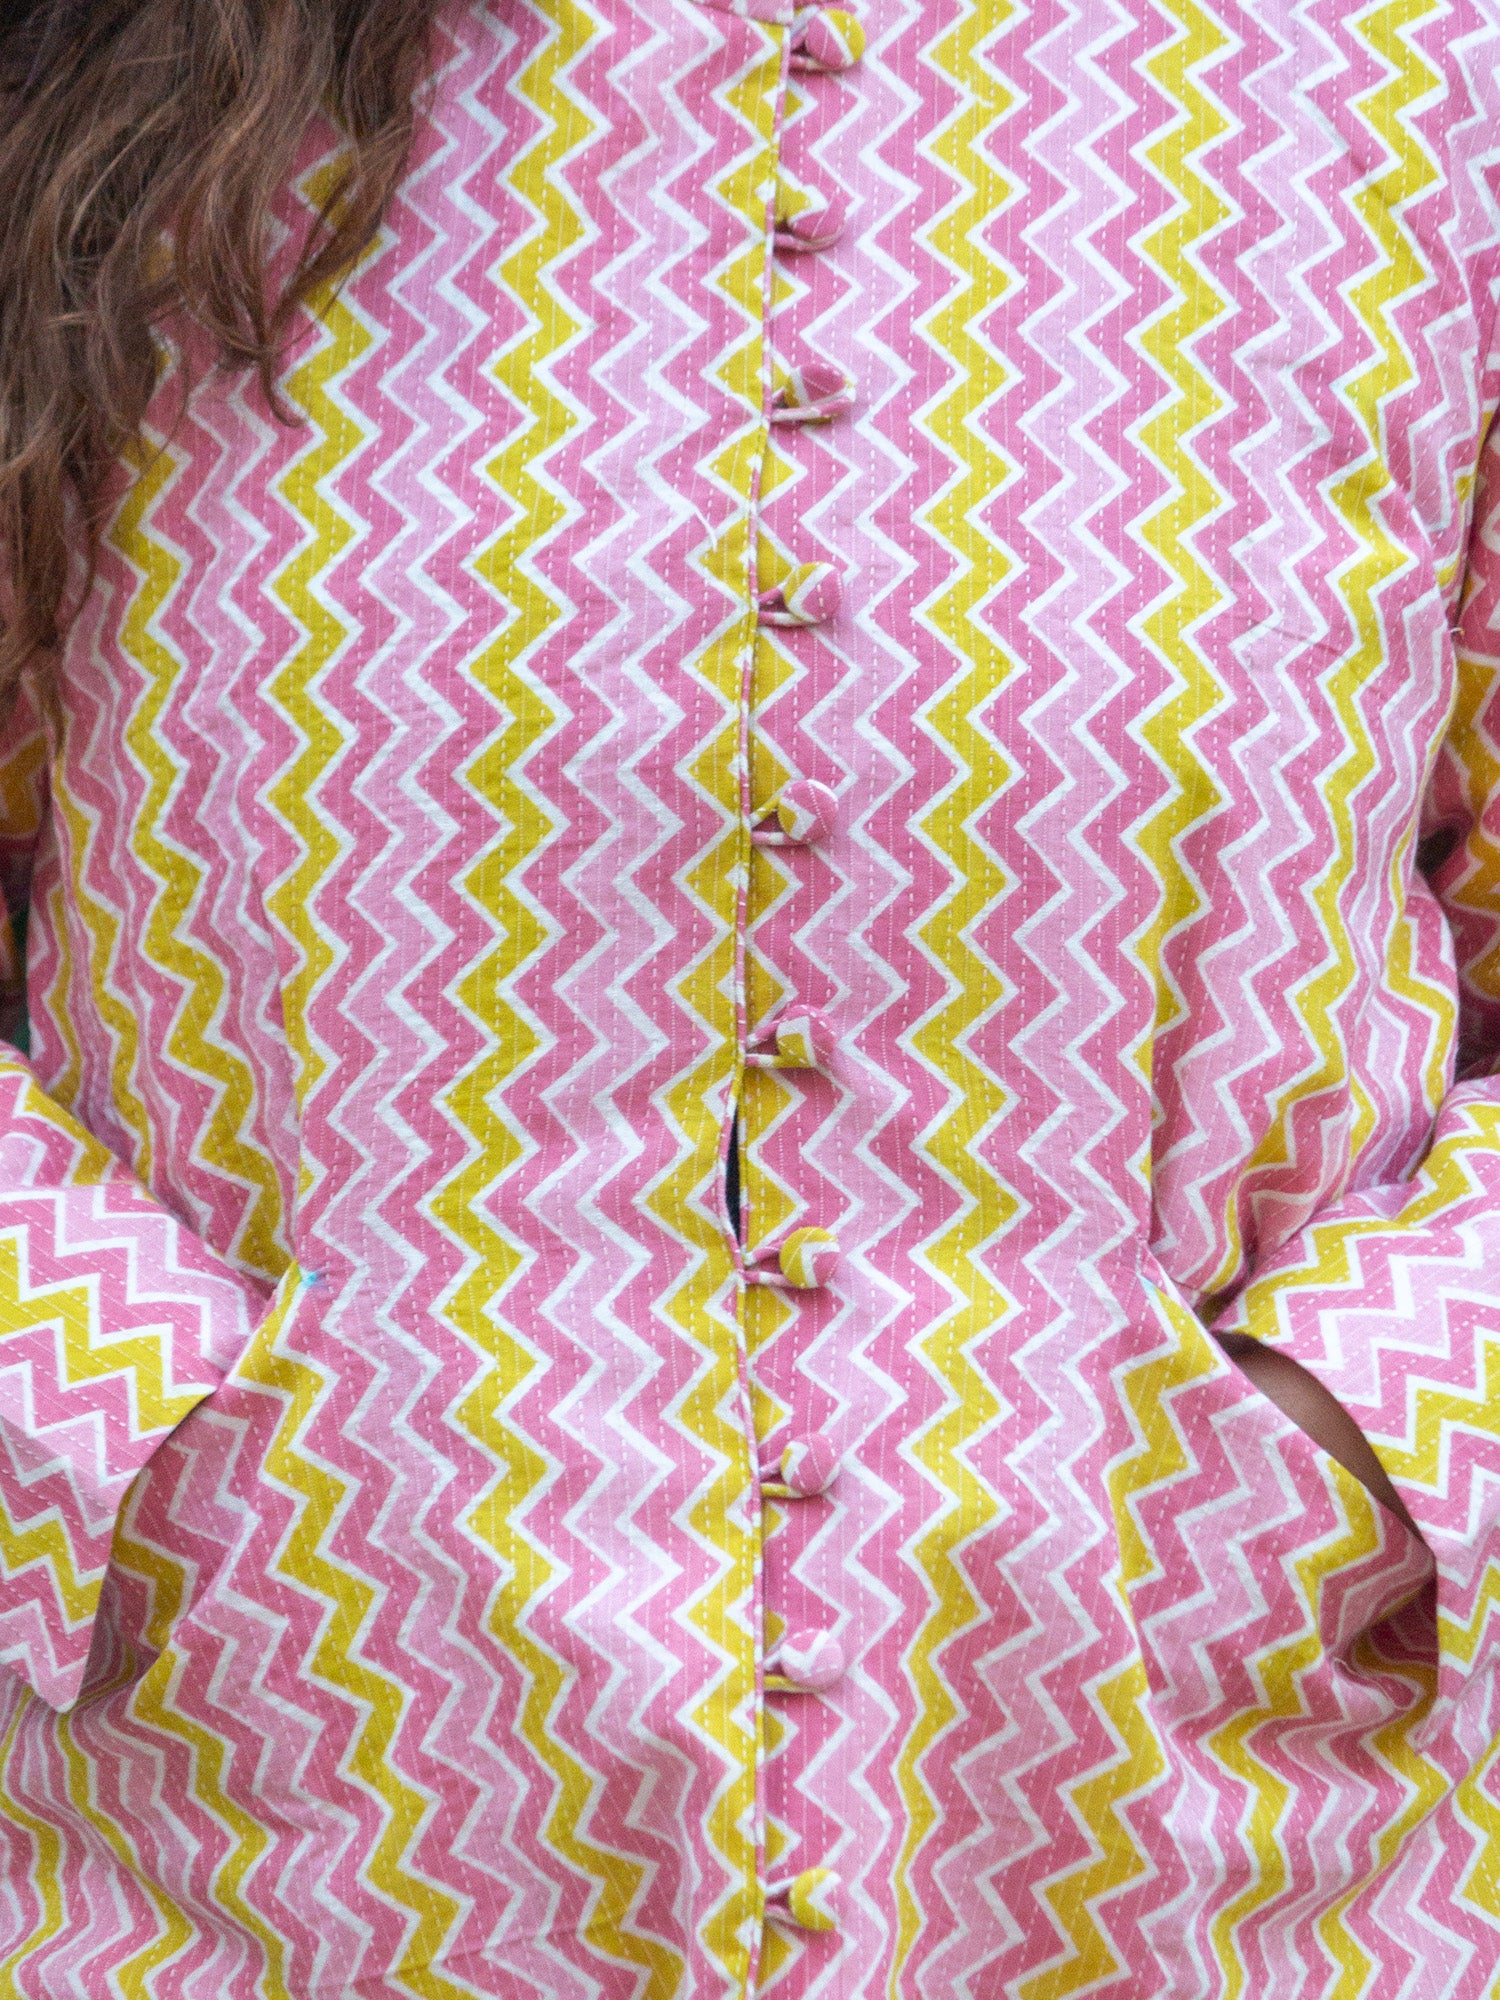 Pink Chevron Printed Cotton Nuh Jacket